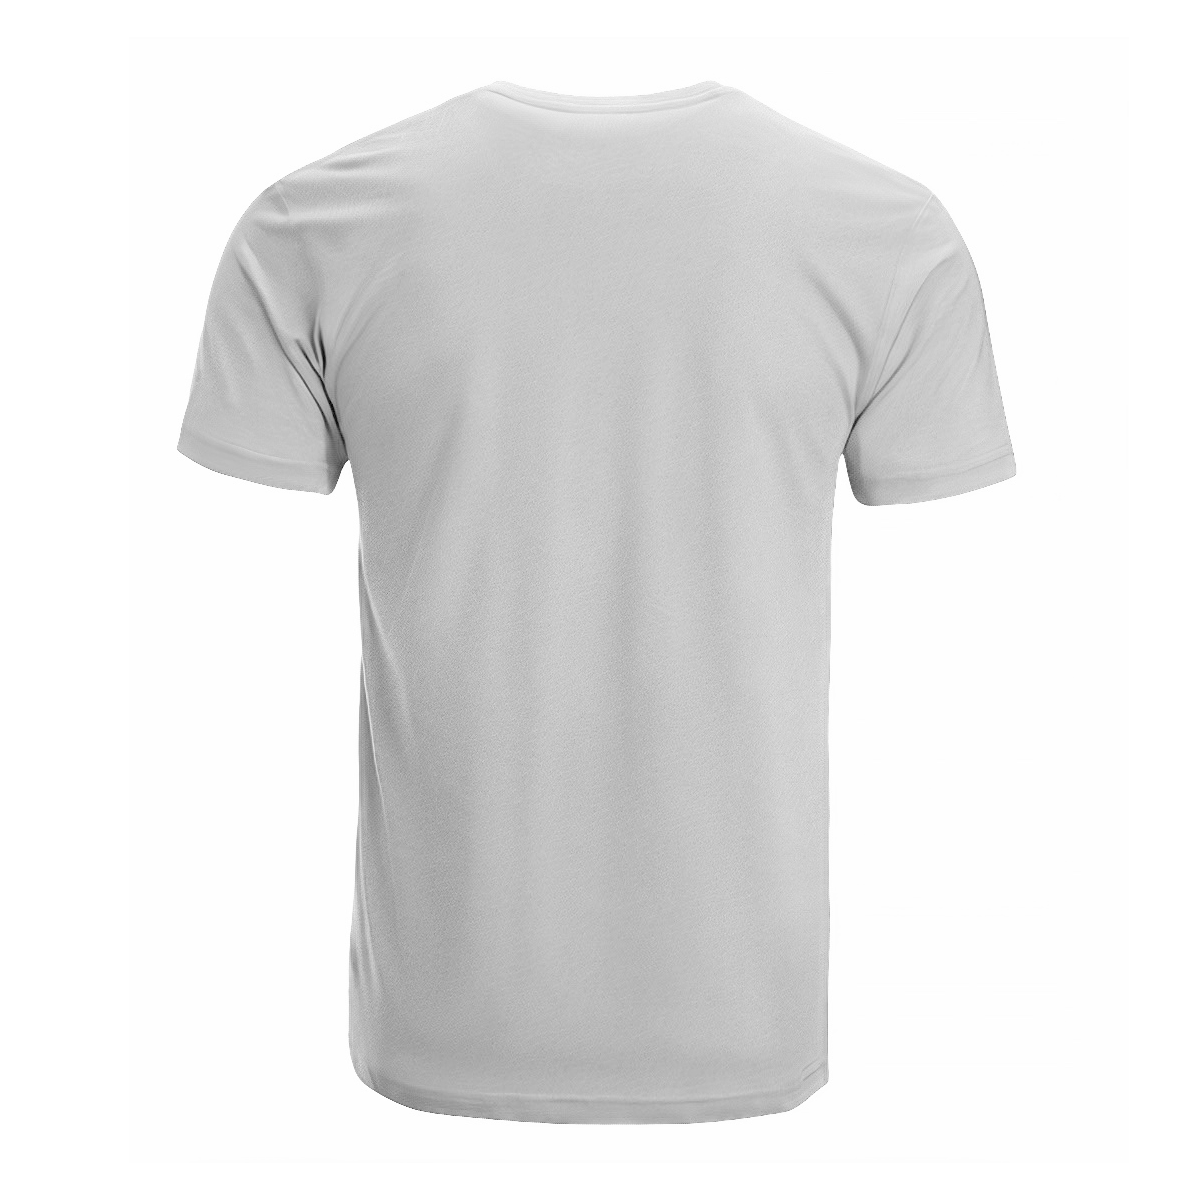 Spottiswood Tartan Crest T-shirt - I'm not yelling style